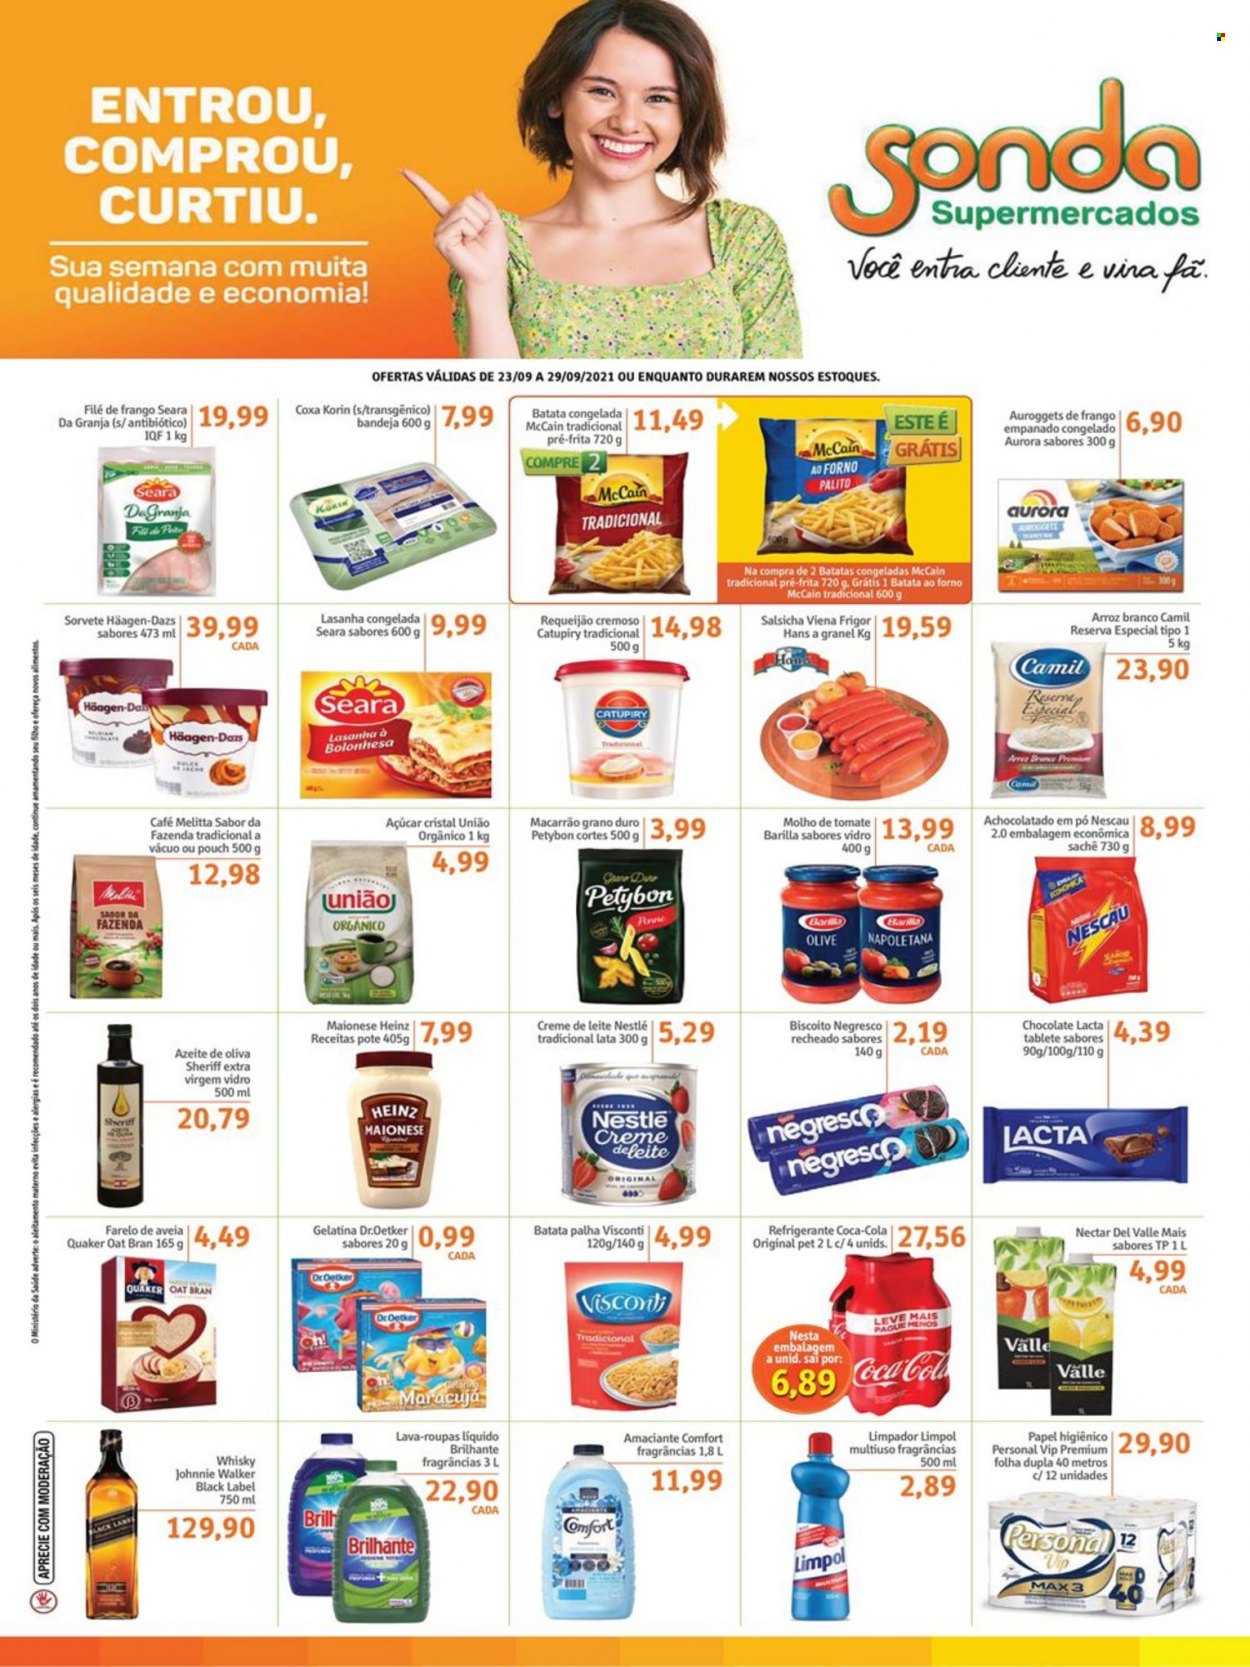 Encarte Sonda Supermercados  - 23.09.2021 - 29.09.2021.